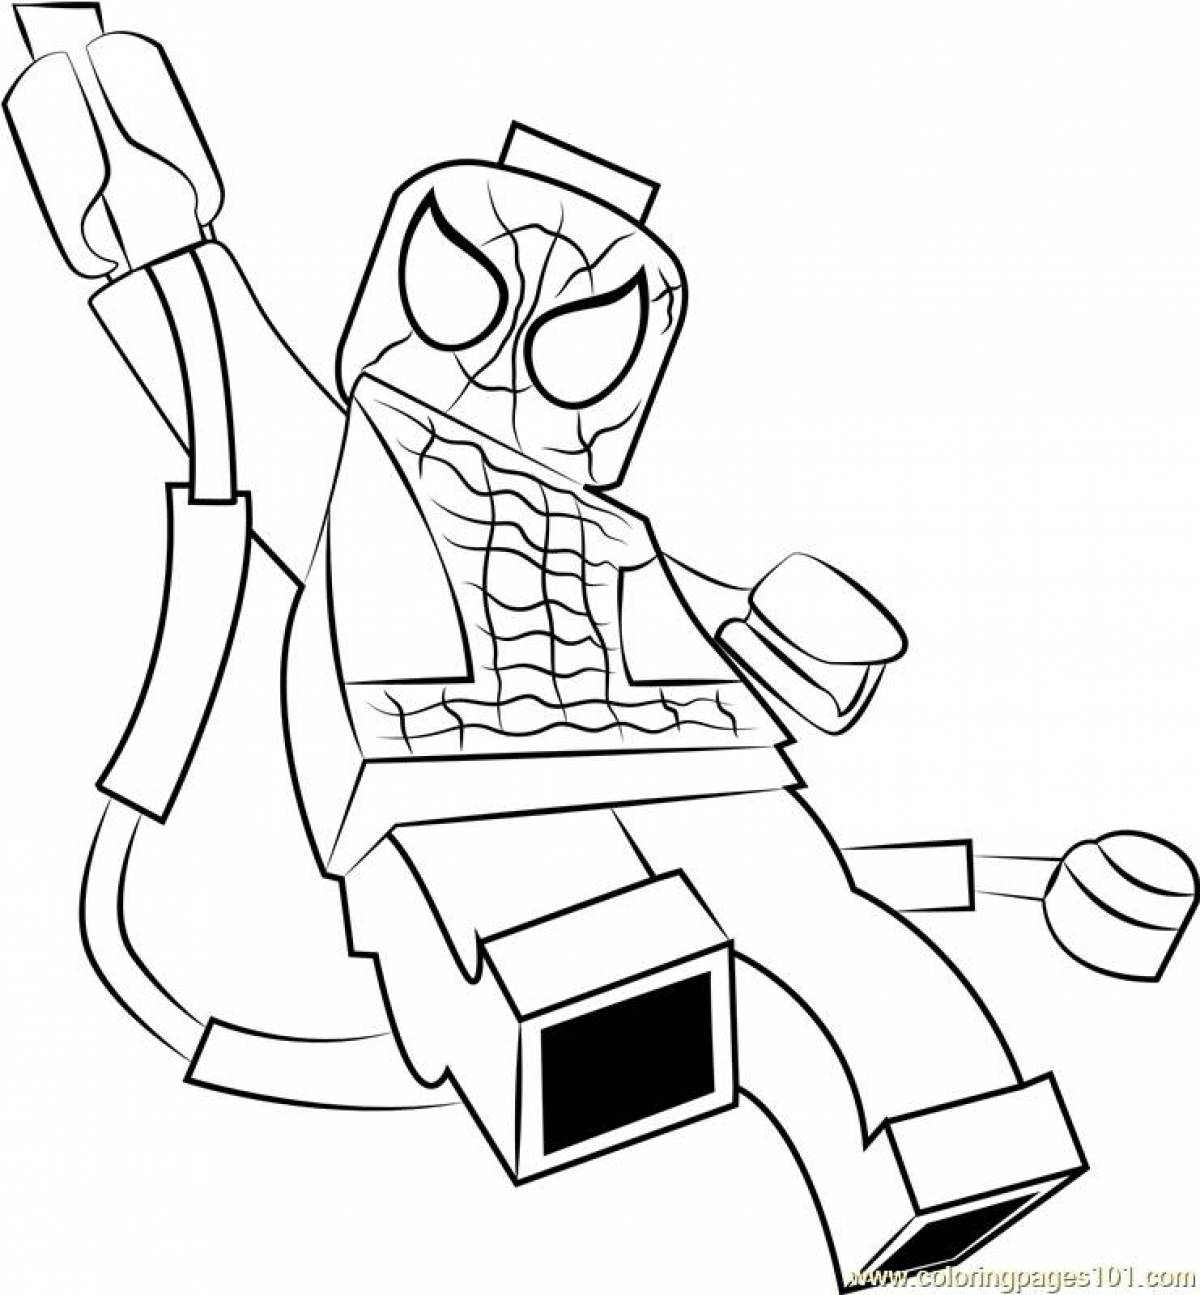 Lego spiderman #3